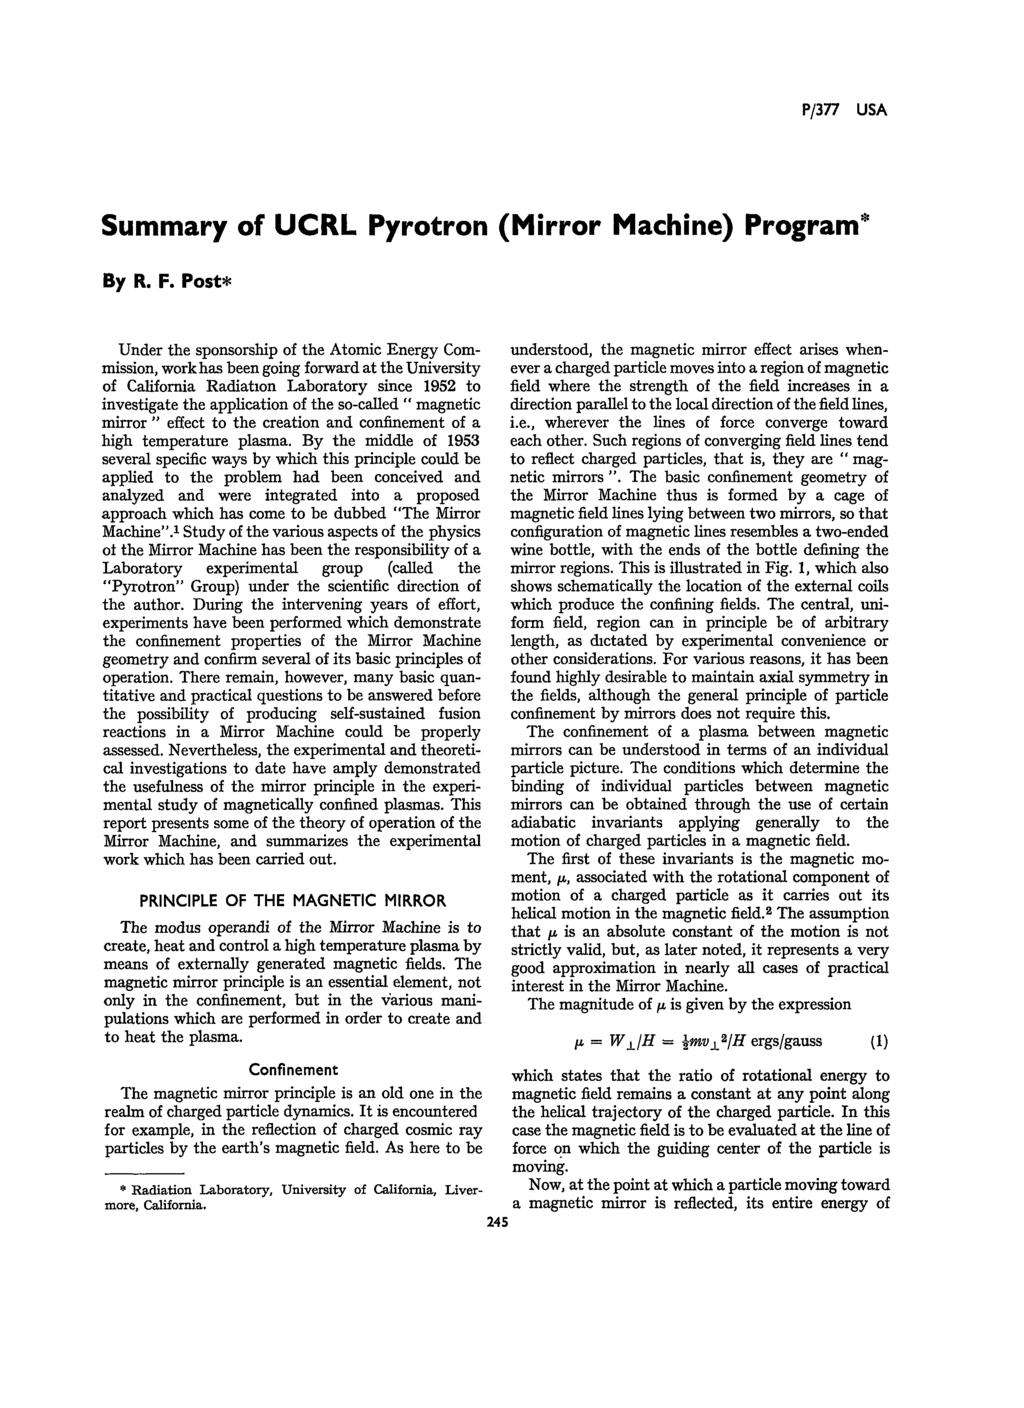 P/377 USA Summary of UCRL P/rotron (Mirror Machine) Program" By R. F.